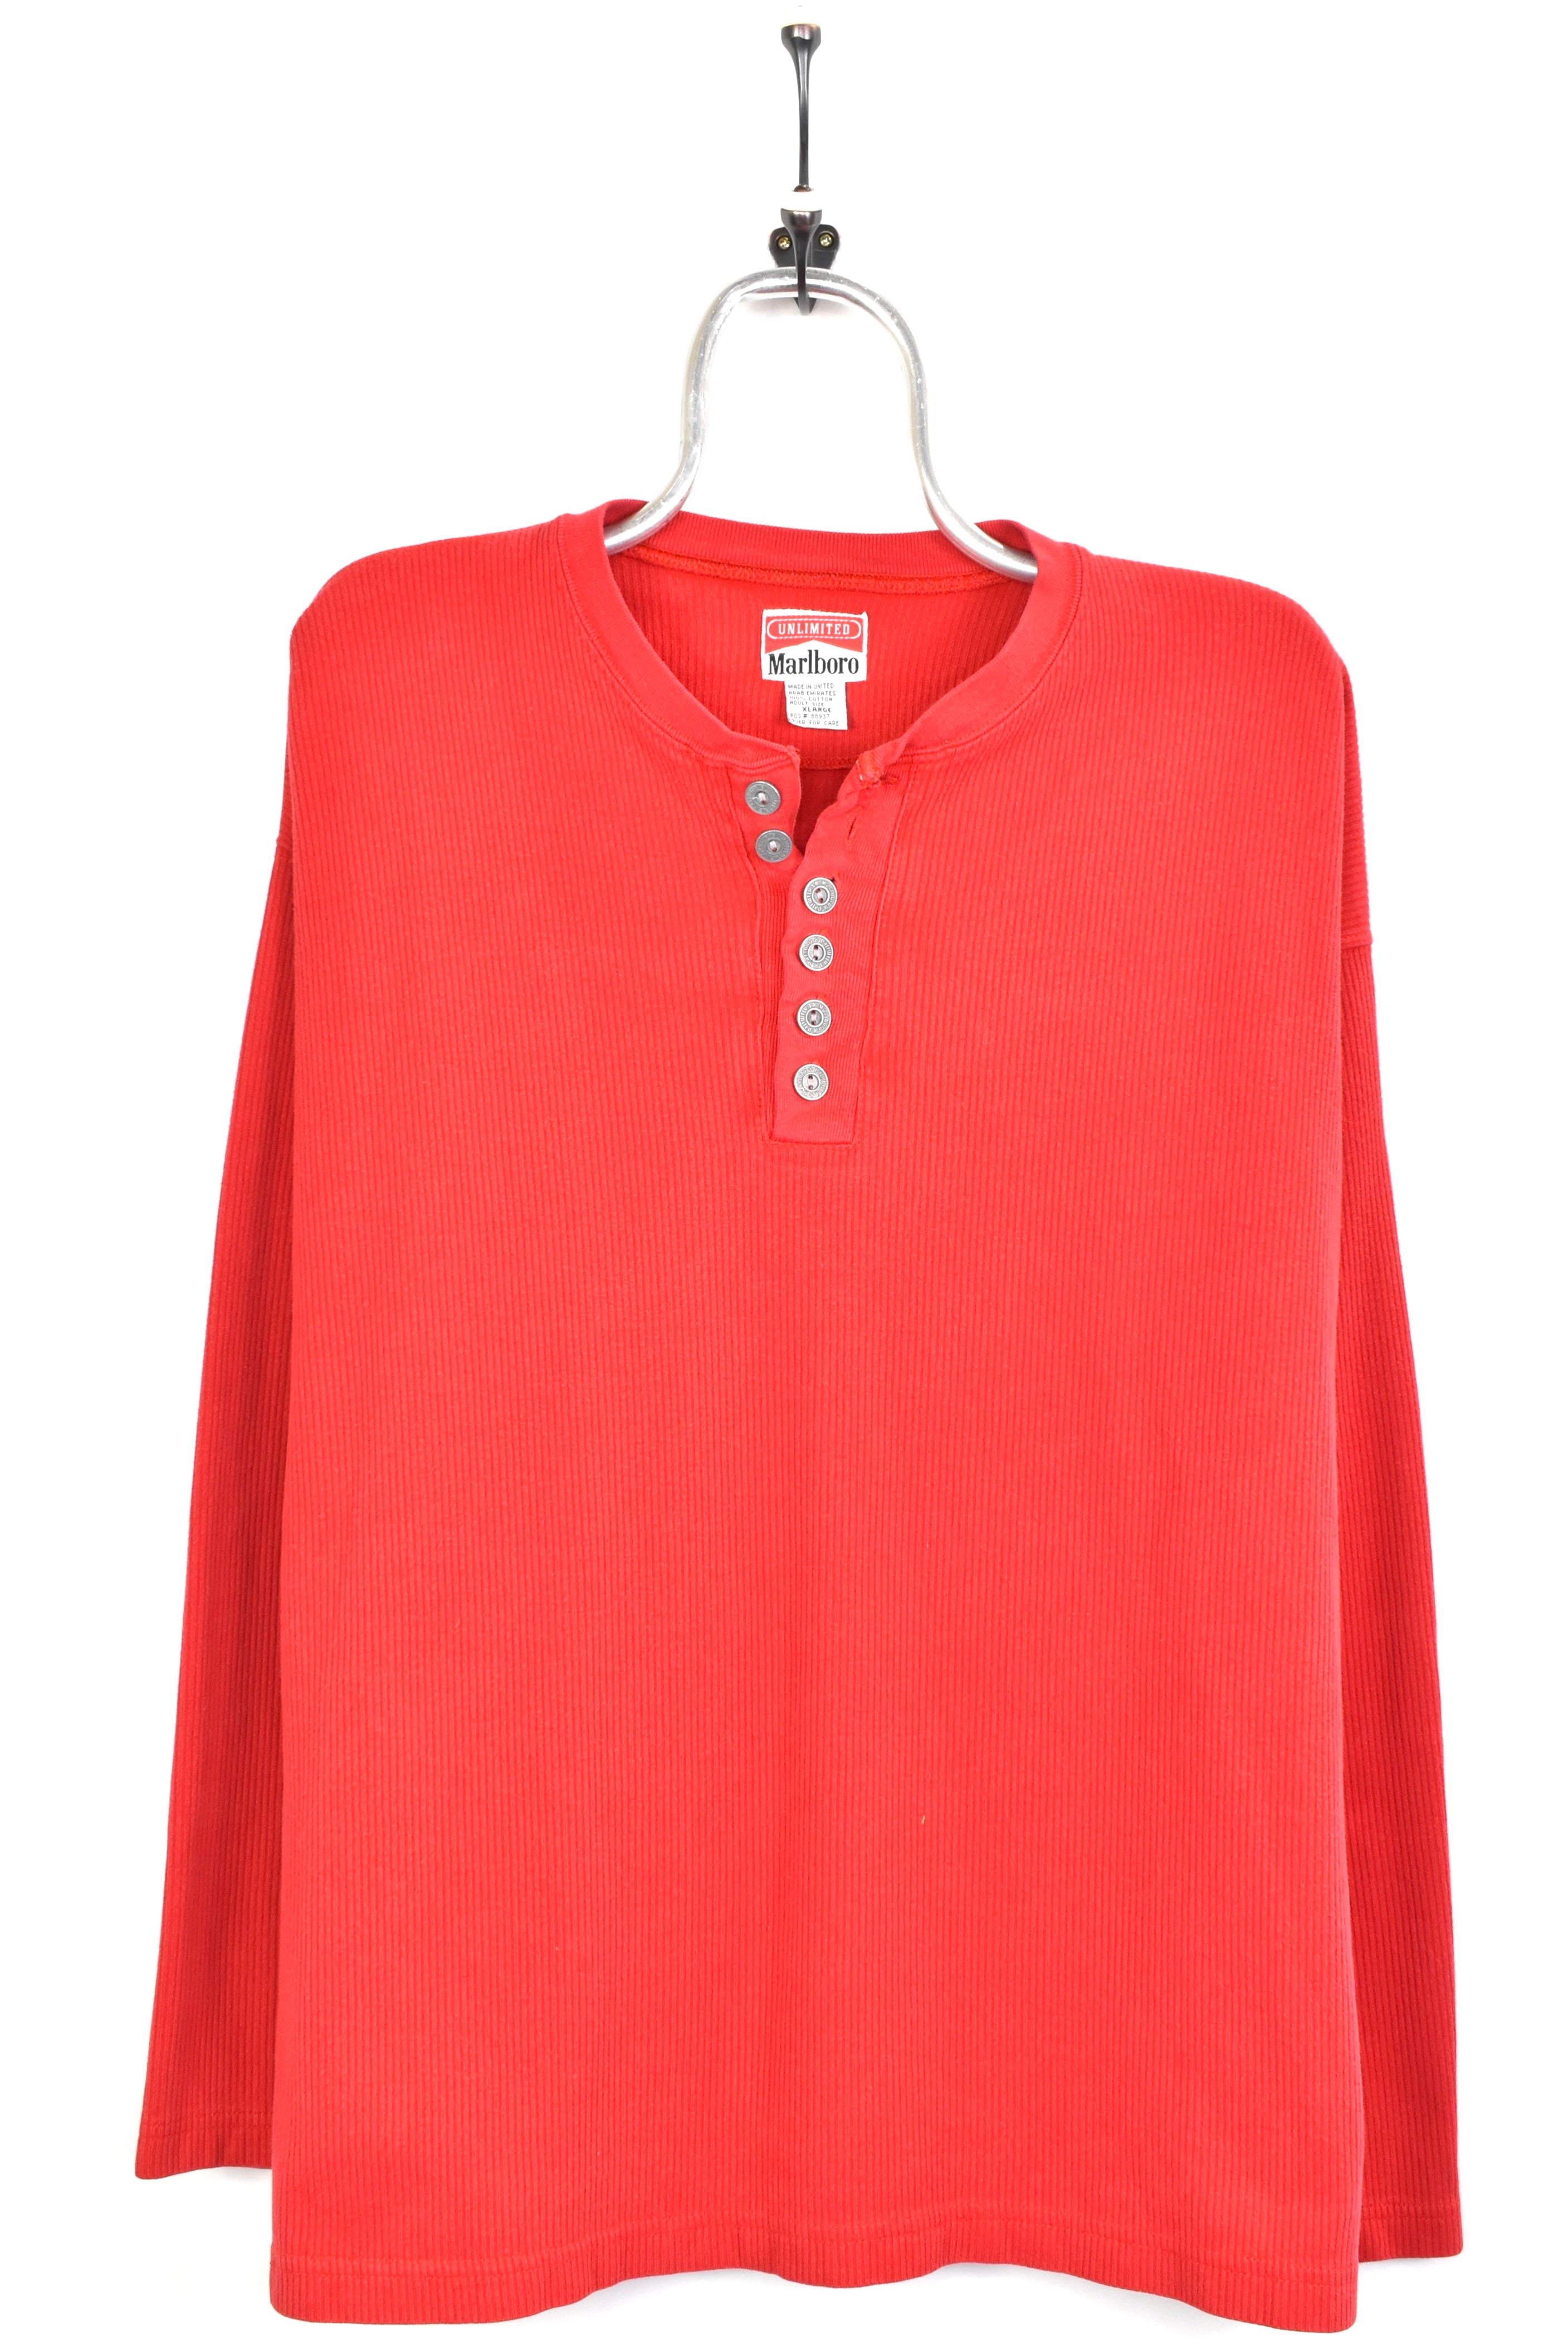 Vintage Marlboro ribbed red sweatshirt | XL MARLBORO